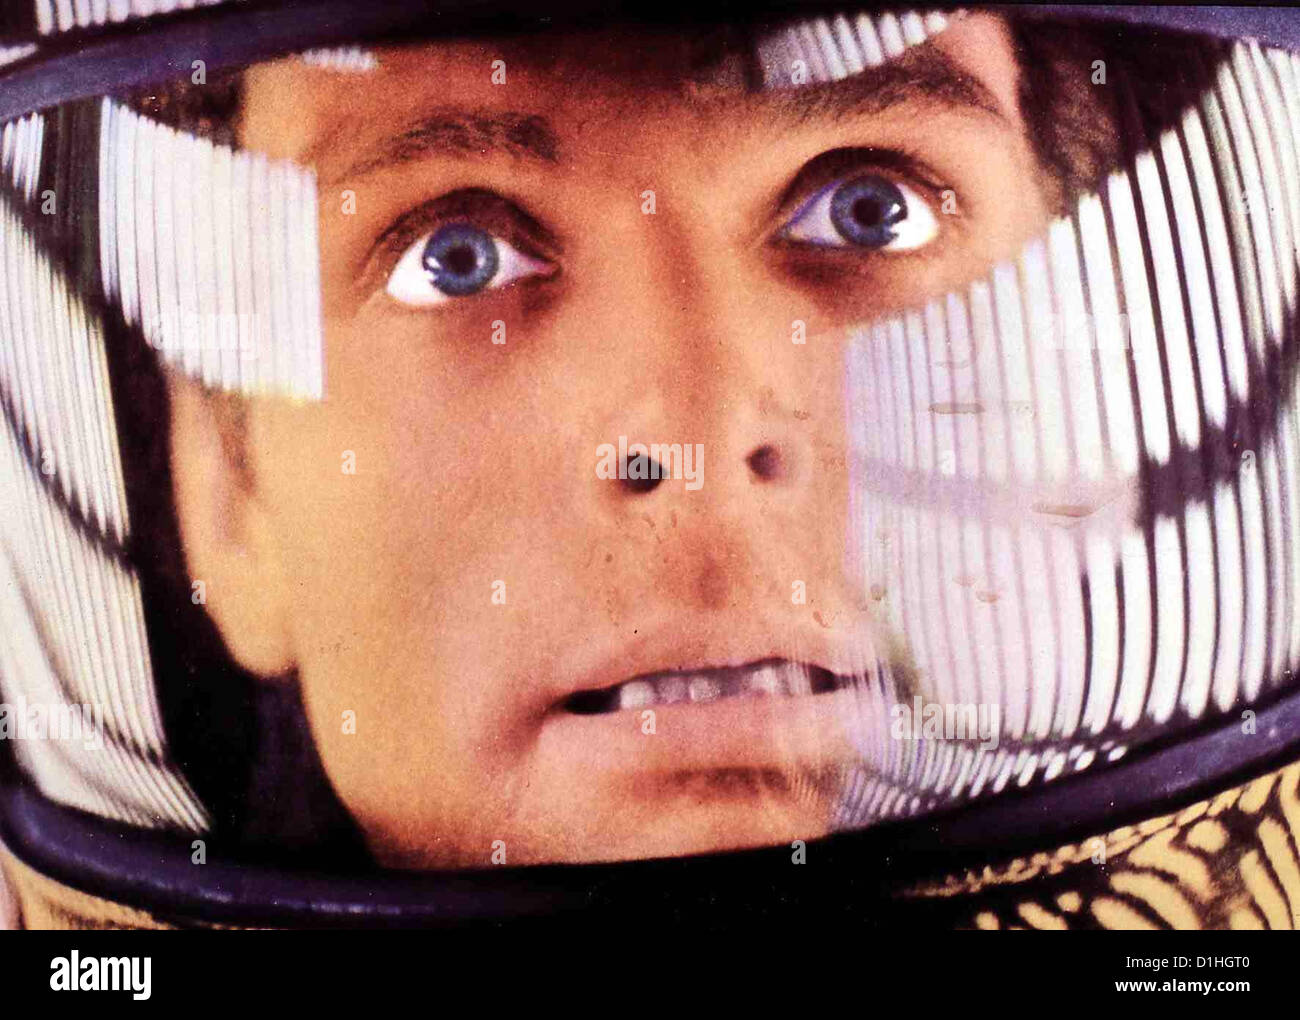 2001 - Odyssee Im Weltraum  2001: Space Odyssey  Keir Dullea Astronaut David Bowman (Keir Dullea) *** Local Caption *** 1968 -- Stock Photo